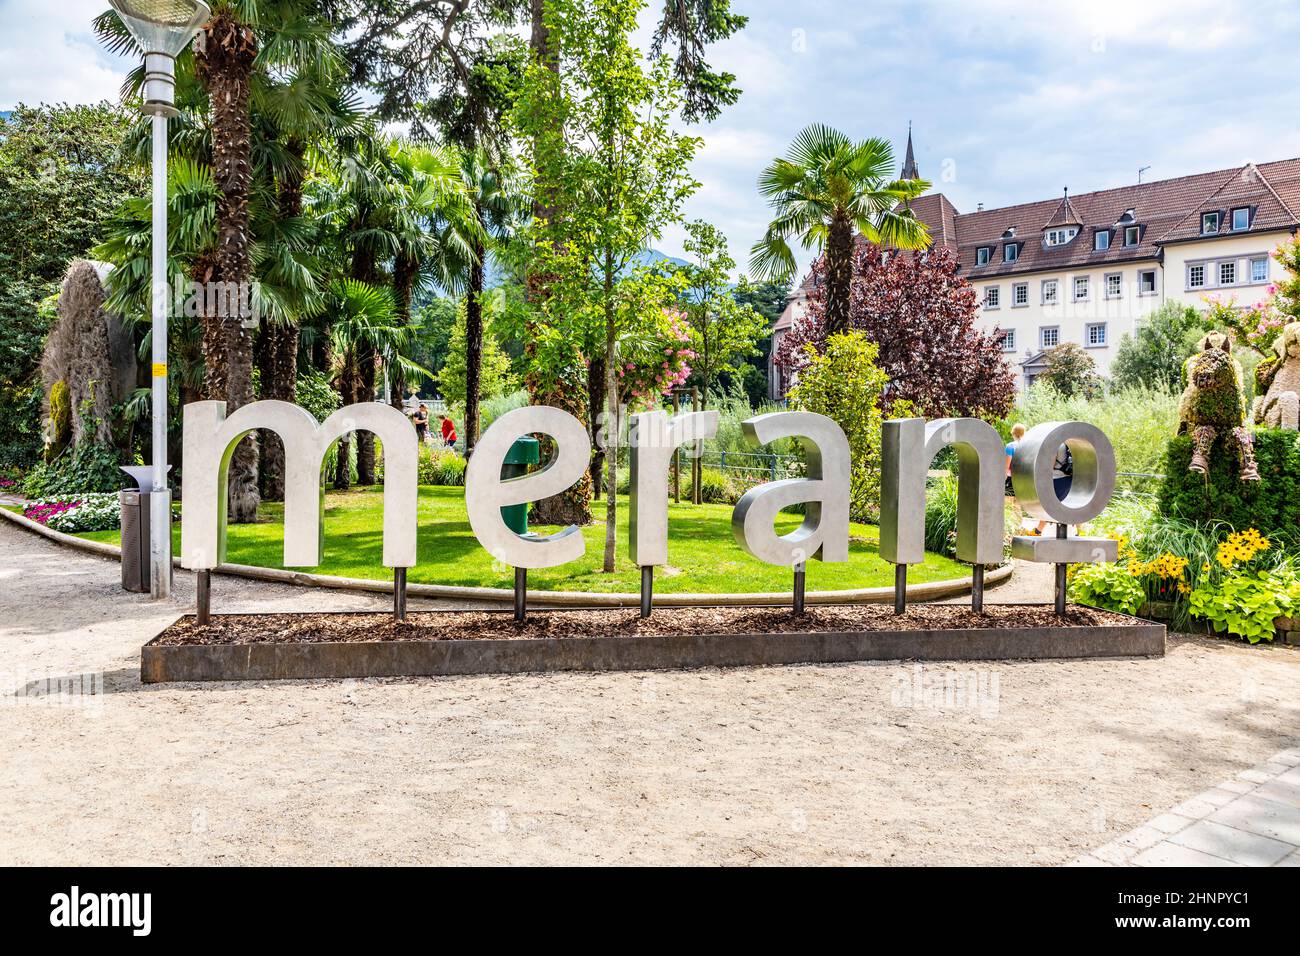 Glimpse of the historic center of Merano with Merano in metal letters in, Meran, Bolzano, Trentino Alto Adige, Italy Stock Photo